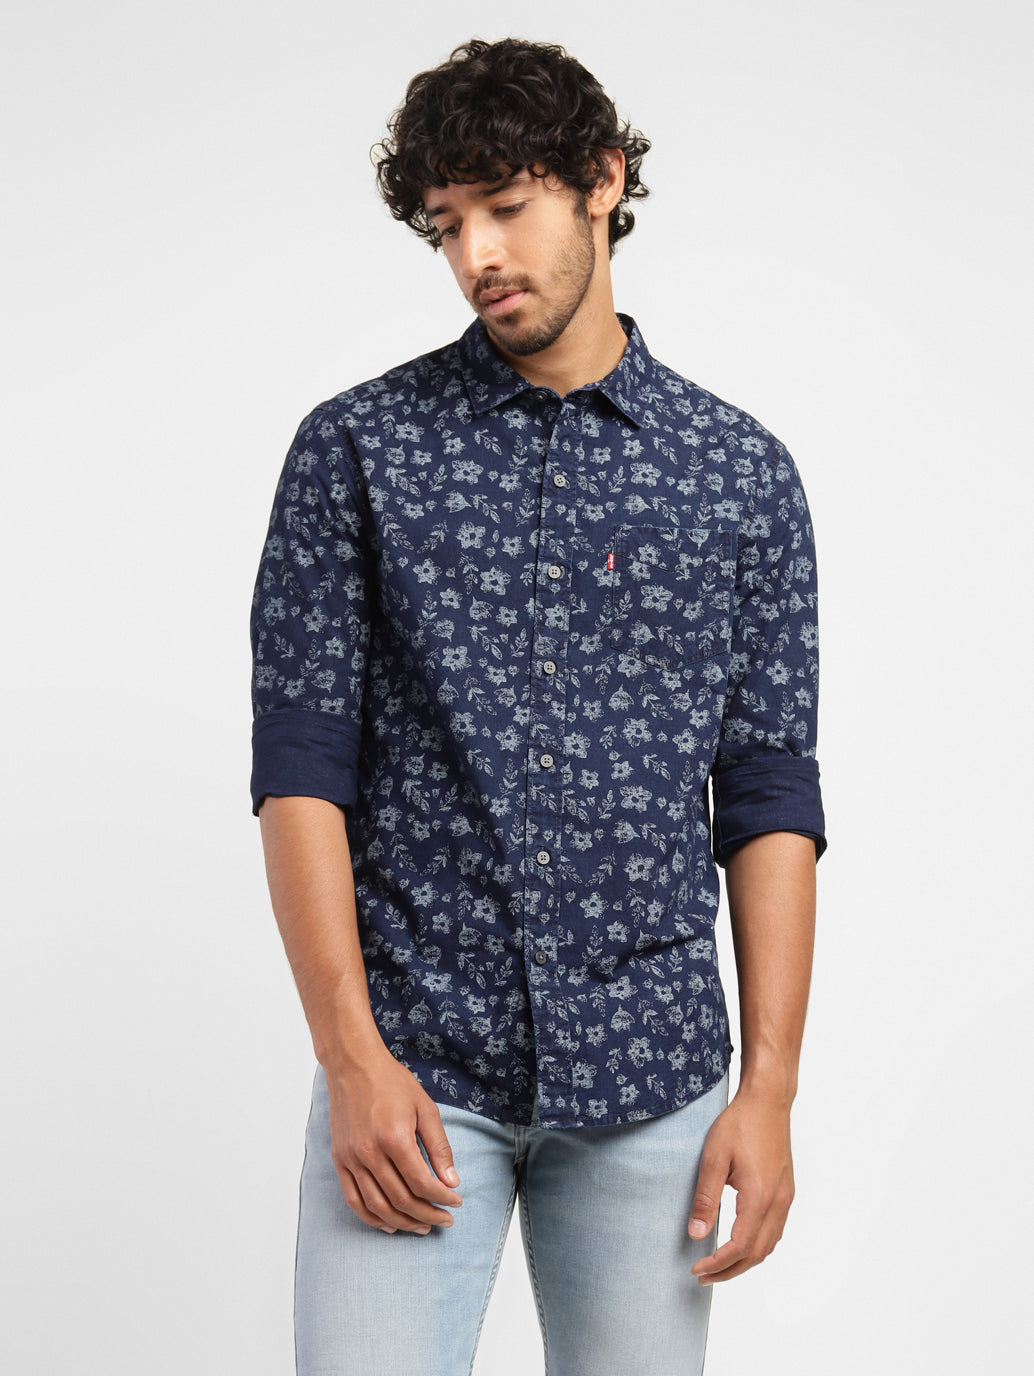 Men's Floral Print Spread Collar Shirt